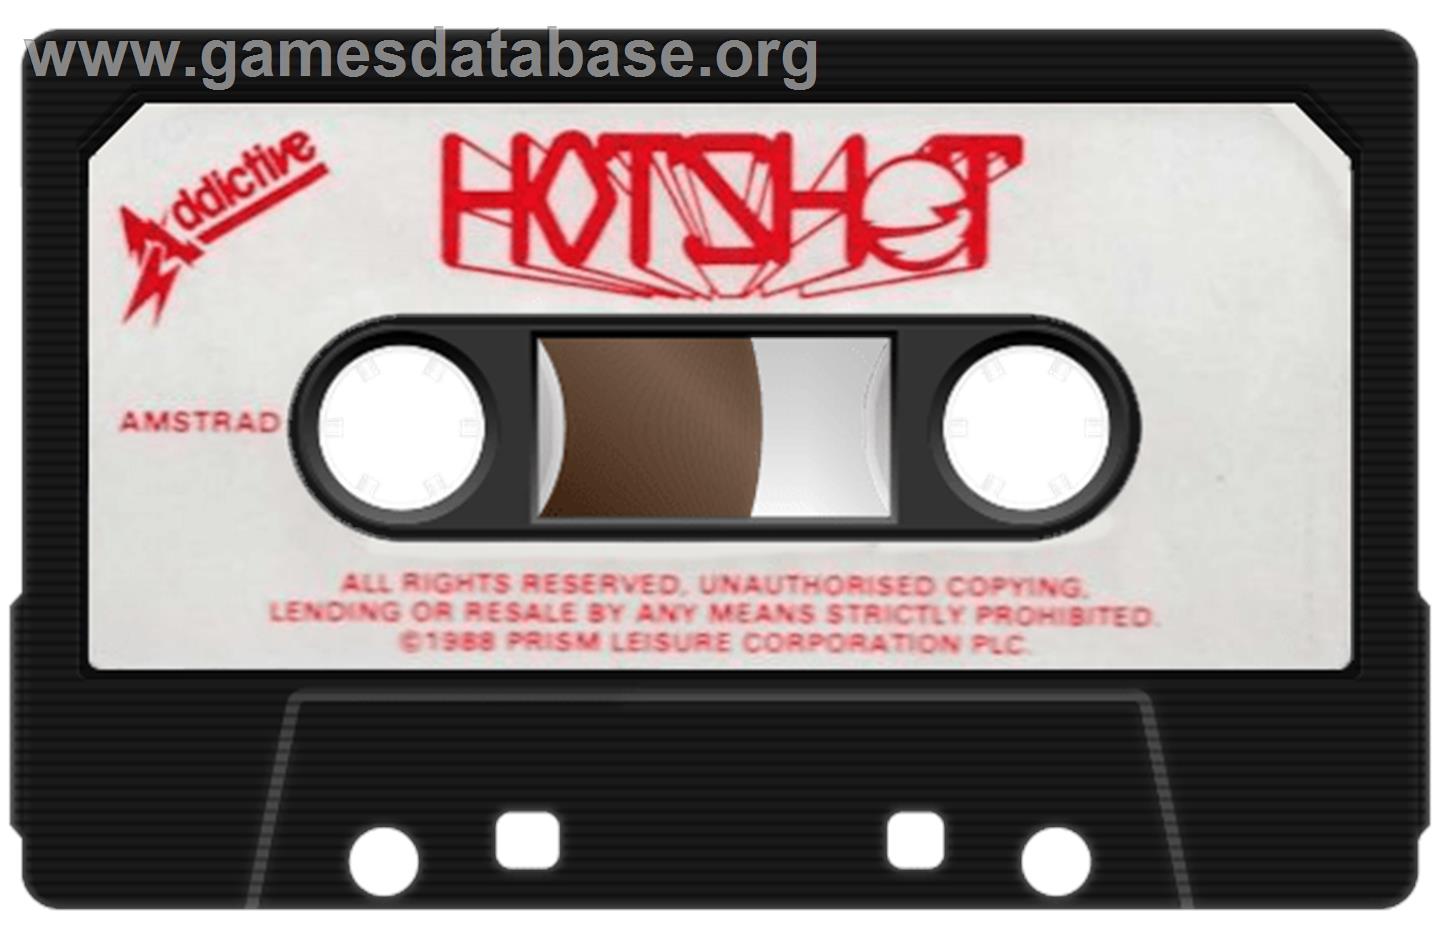 Hot Shot - Amstrad CPC - Artwork - Cartridge